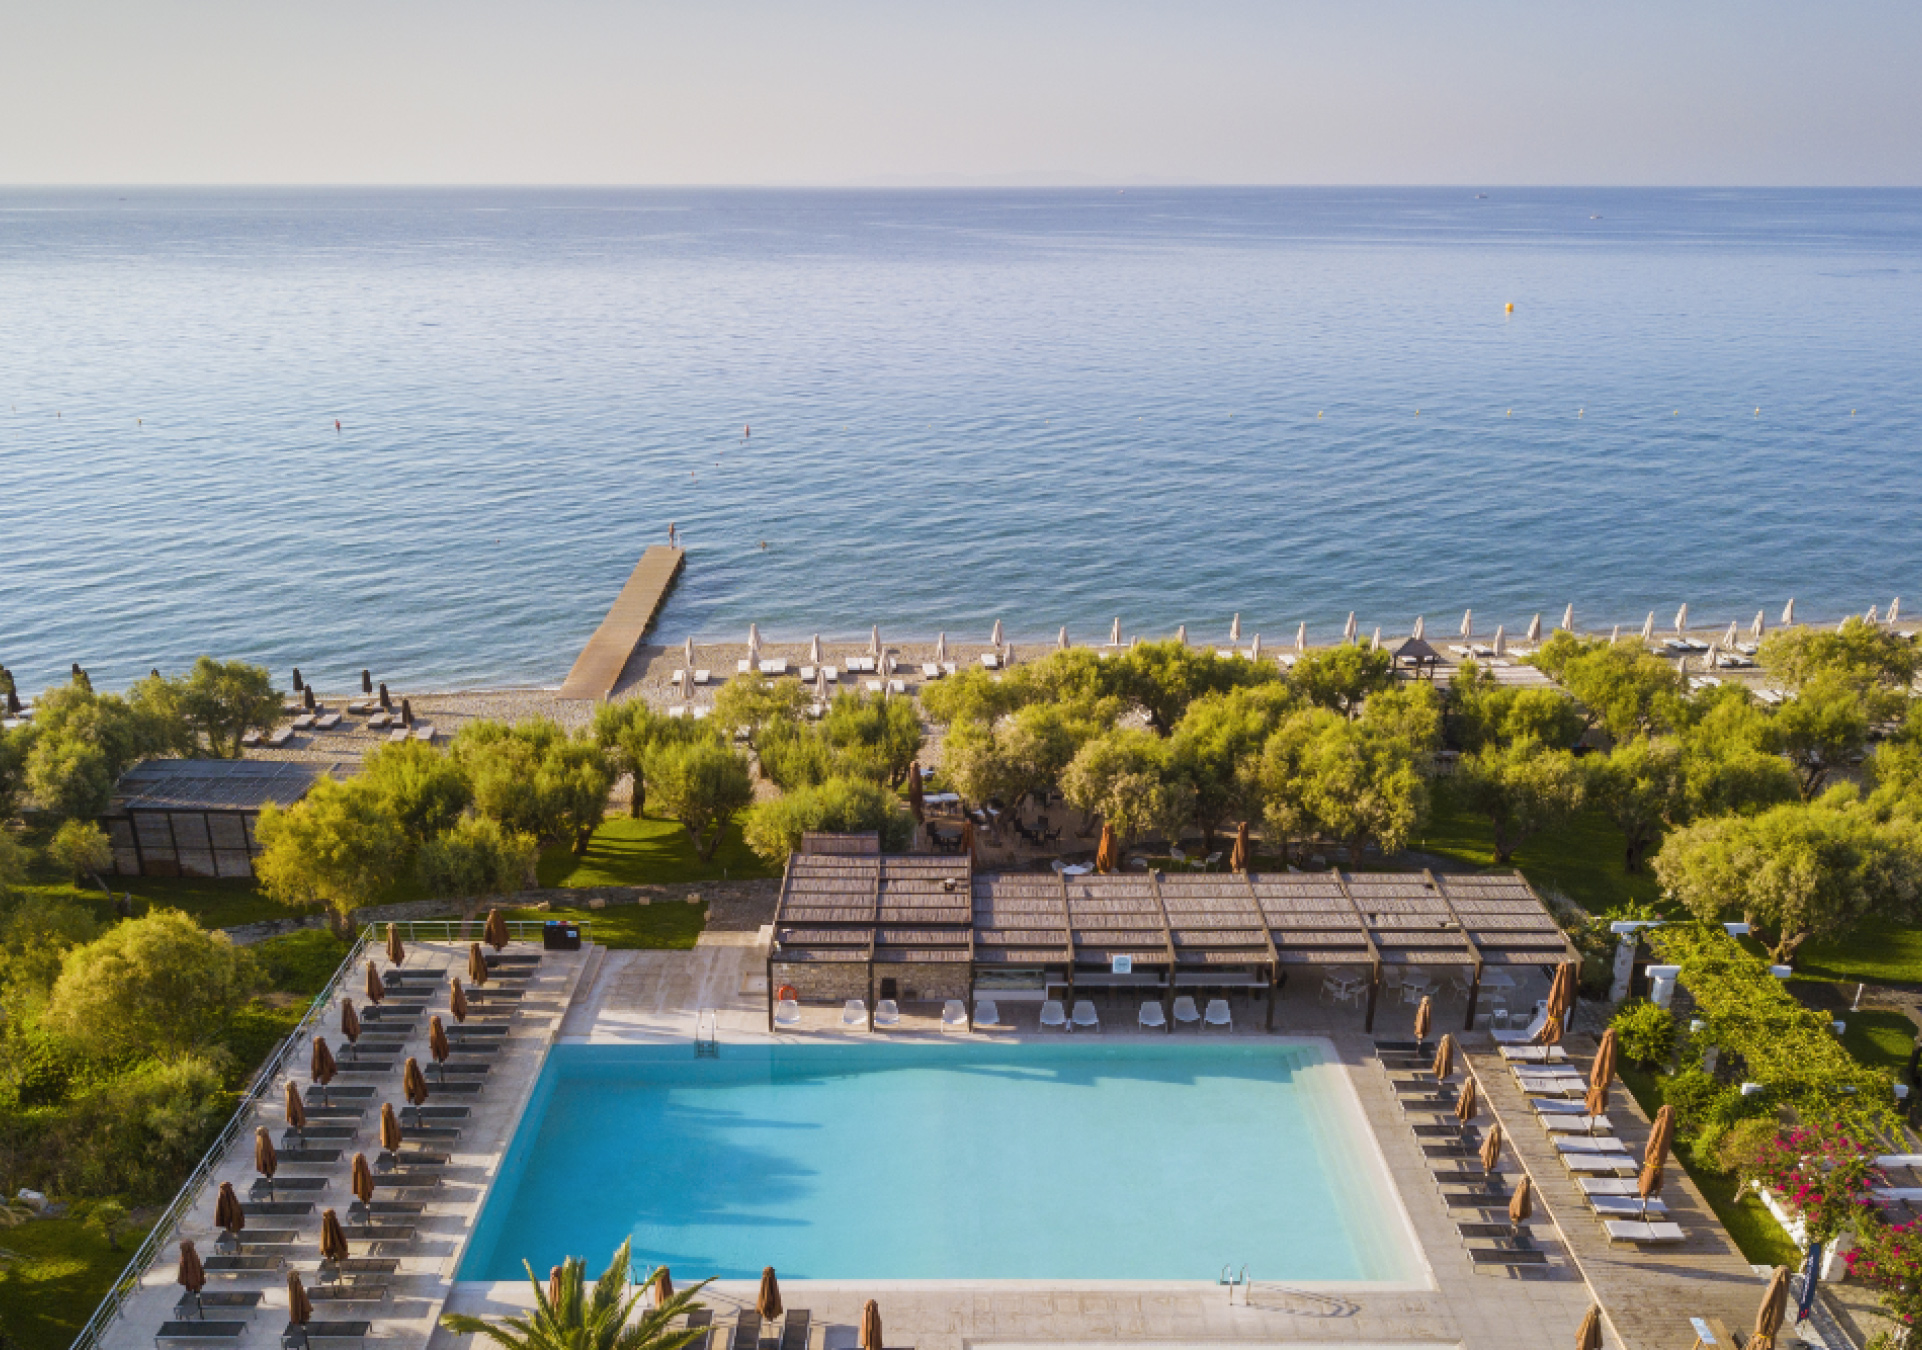 Main pool at Doryssa Seaside, a 5 star luxury resort in Samos